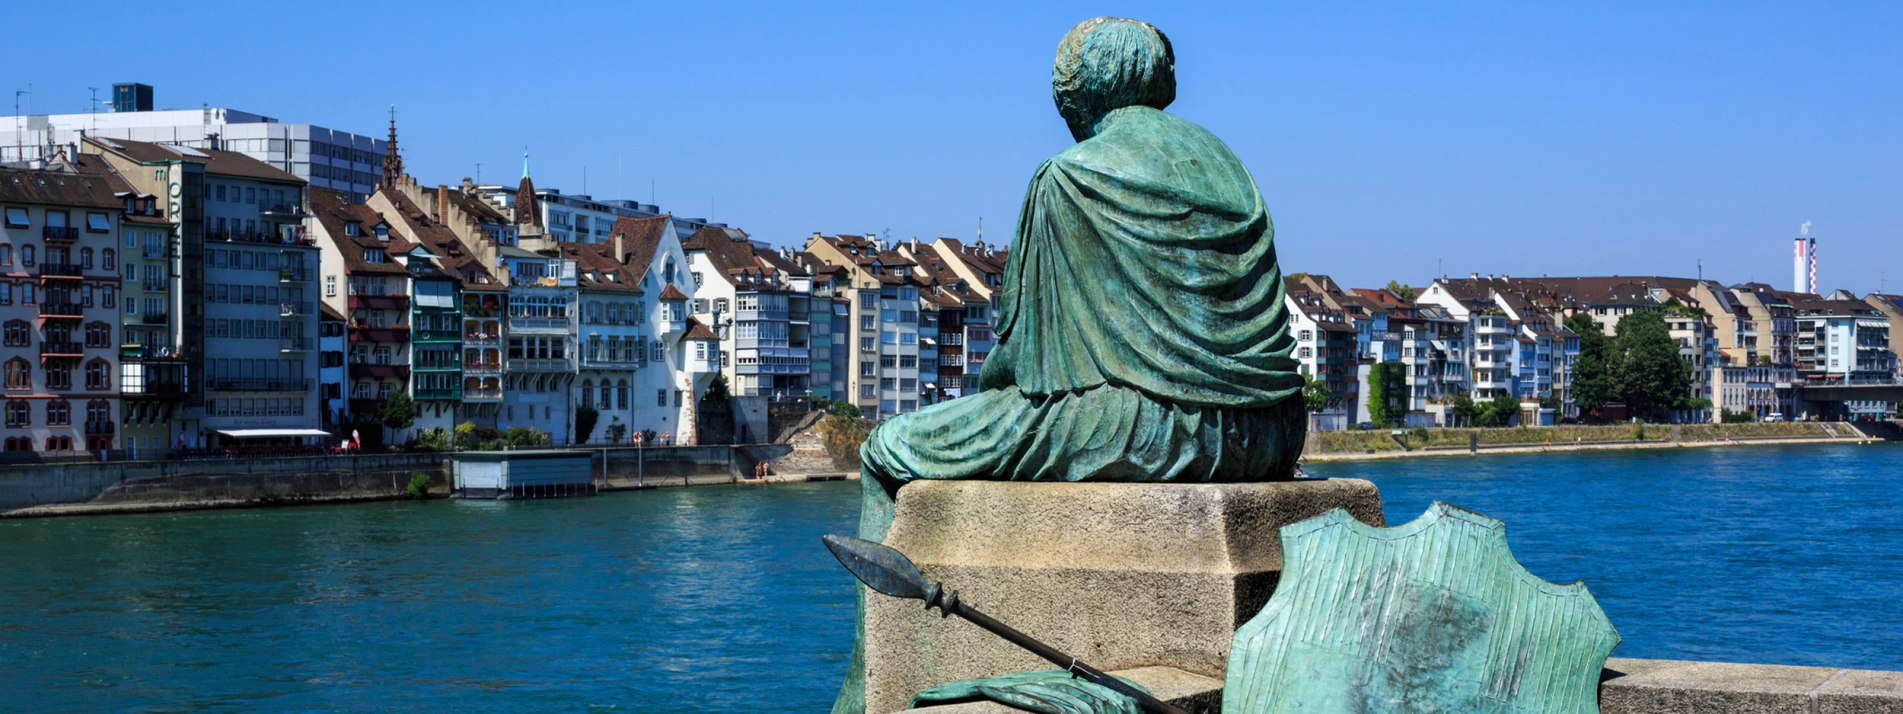 Die Helvetia-Statue am Ufer des Rheisn in Basel - BAHNHIT.DE, © getty, Foto: Stephen Allen